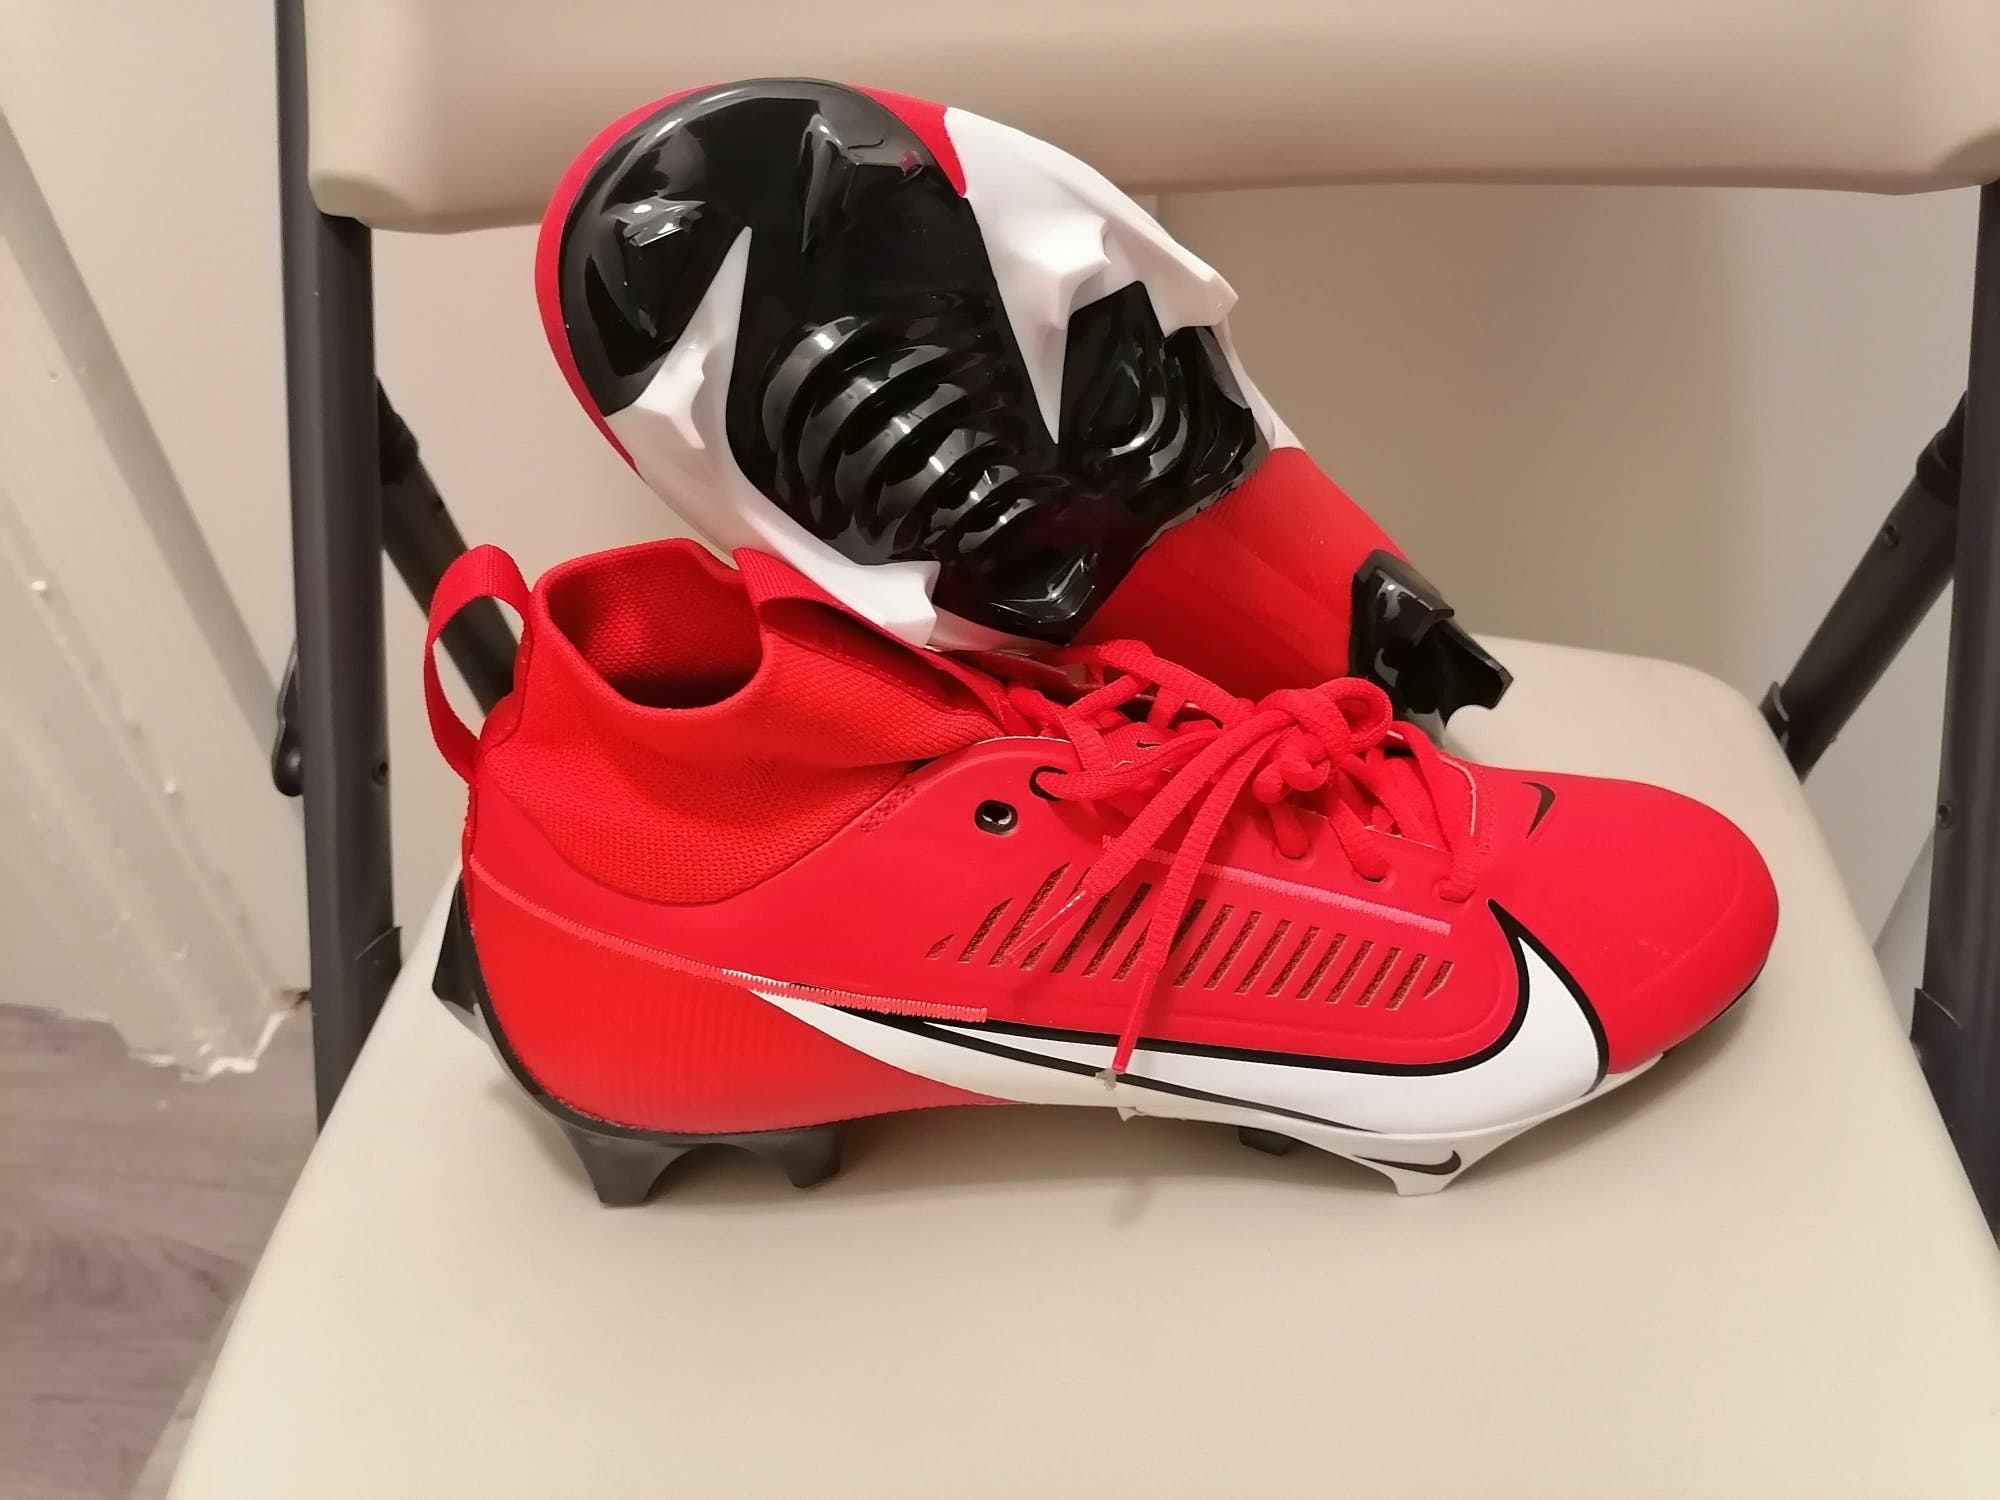 Men's Nike Vapor Edge Pro 360 2 Red Football Cleats DA5456-616 Size 11.5